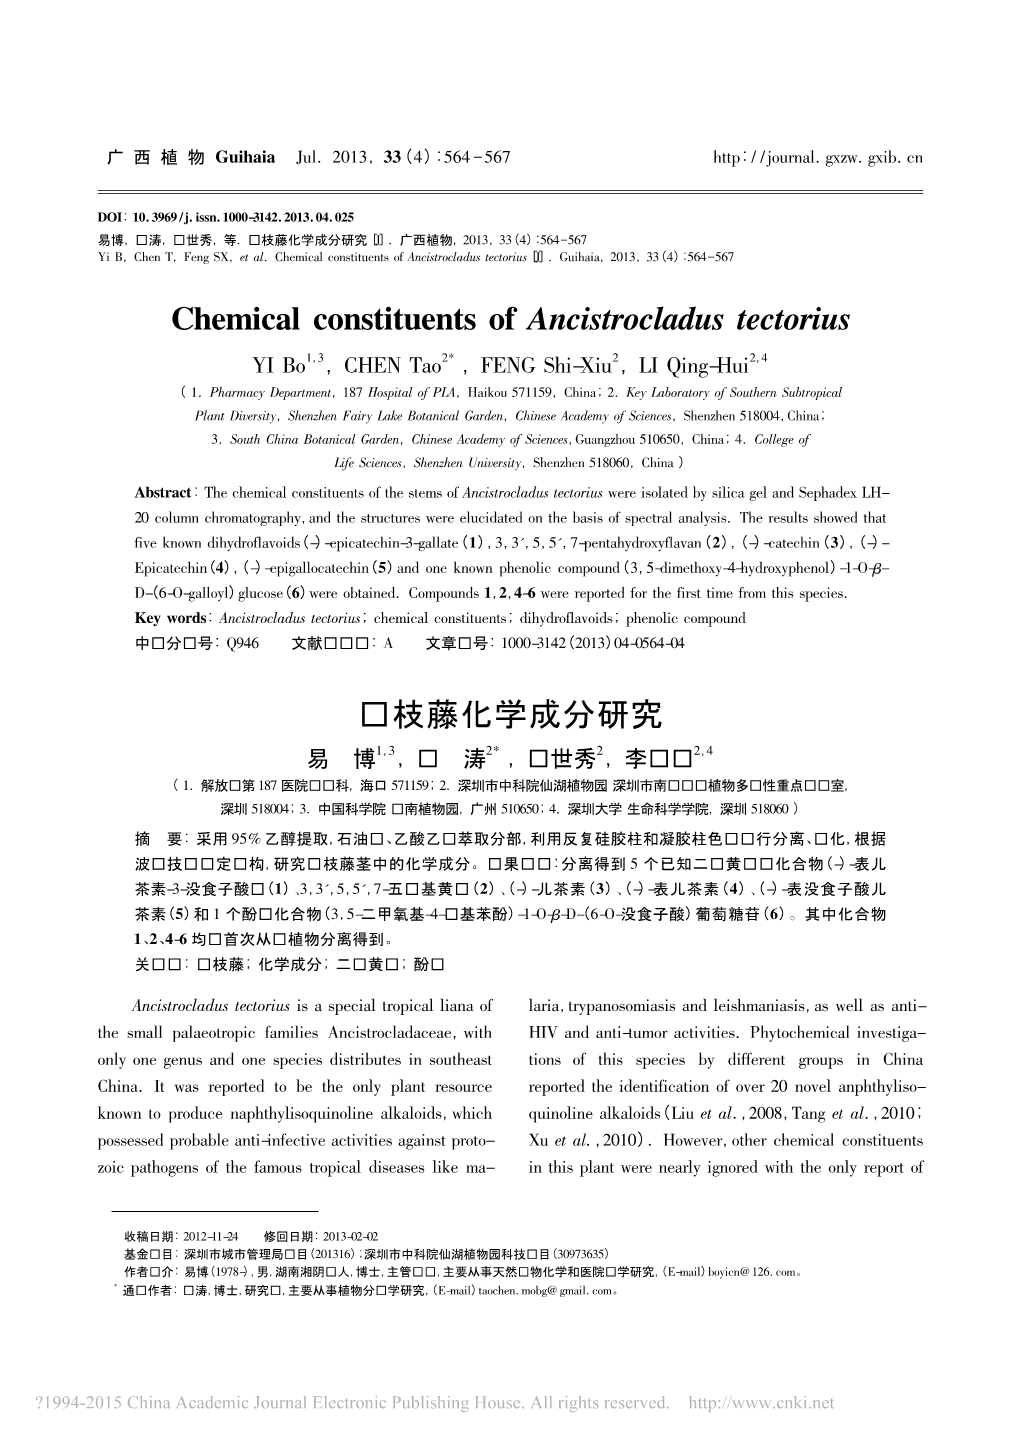 Chemical Constituents of Ancistrocladus Tectorius 钩枝藤